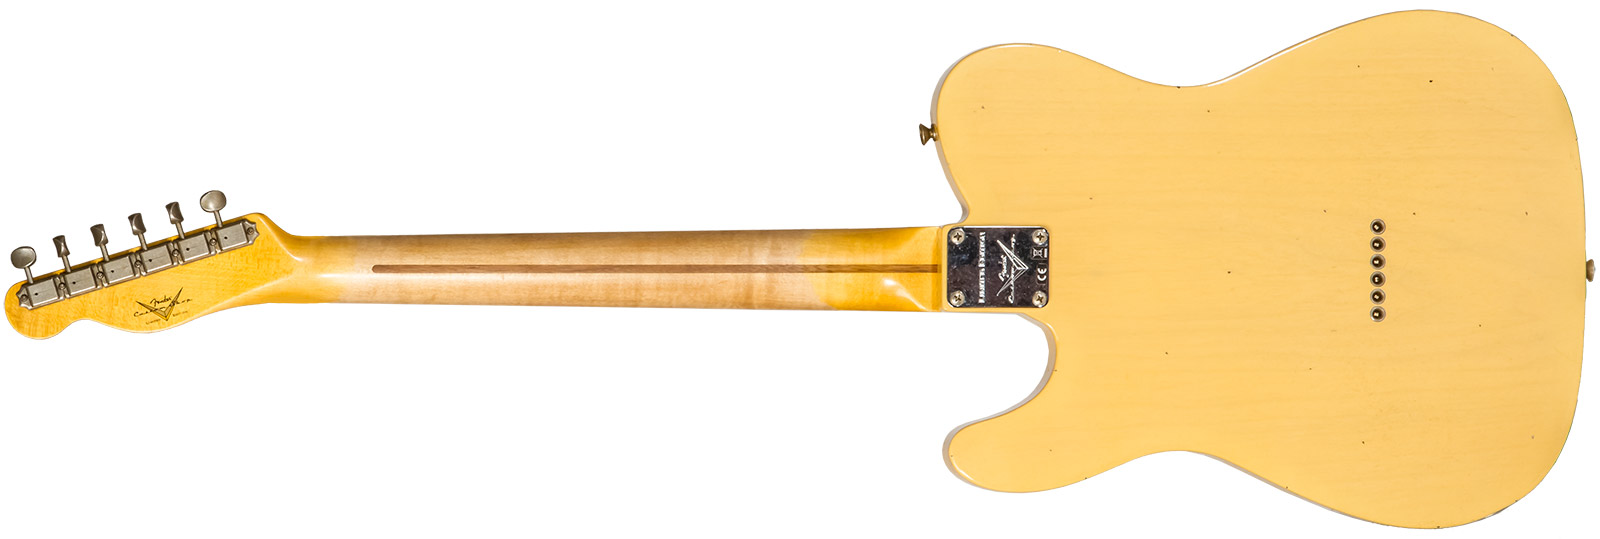 Fender Custom Shop Tele 1953 2s Ht Mn #r128606 - Journeyman Relic Aged Nocaster Blonde - Guitare Électrique Forme Tel - Variation 1